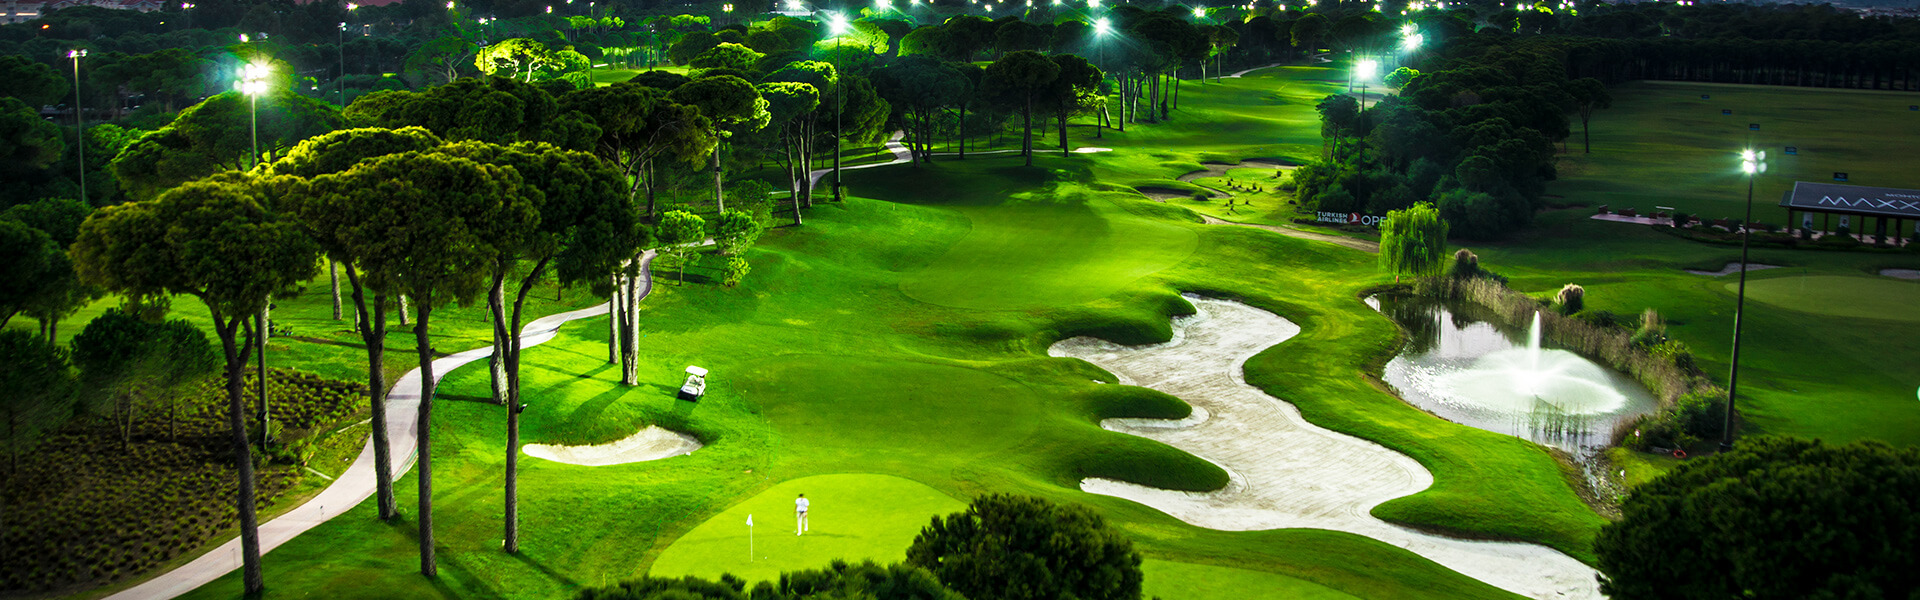 Bilyana Golf - Montgomerie Maxx Royal Golf Course